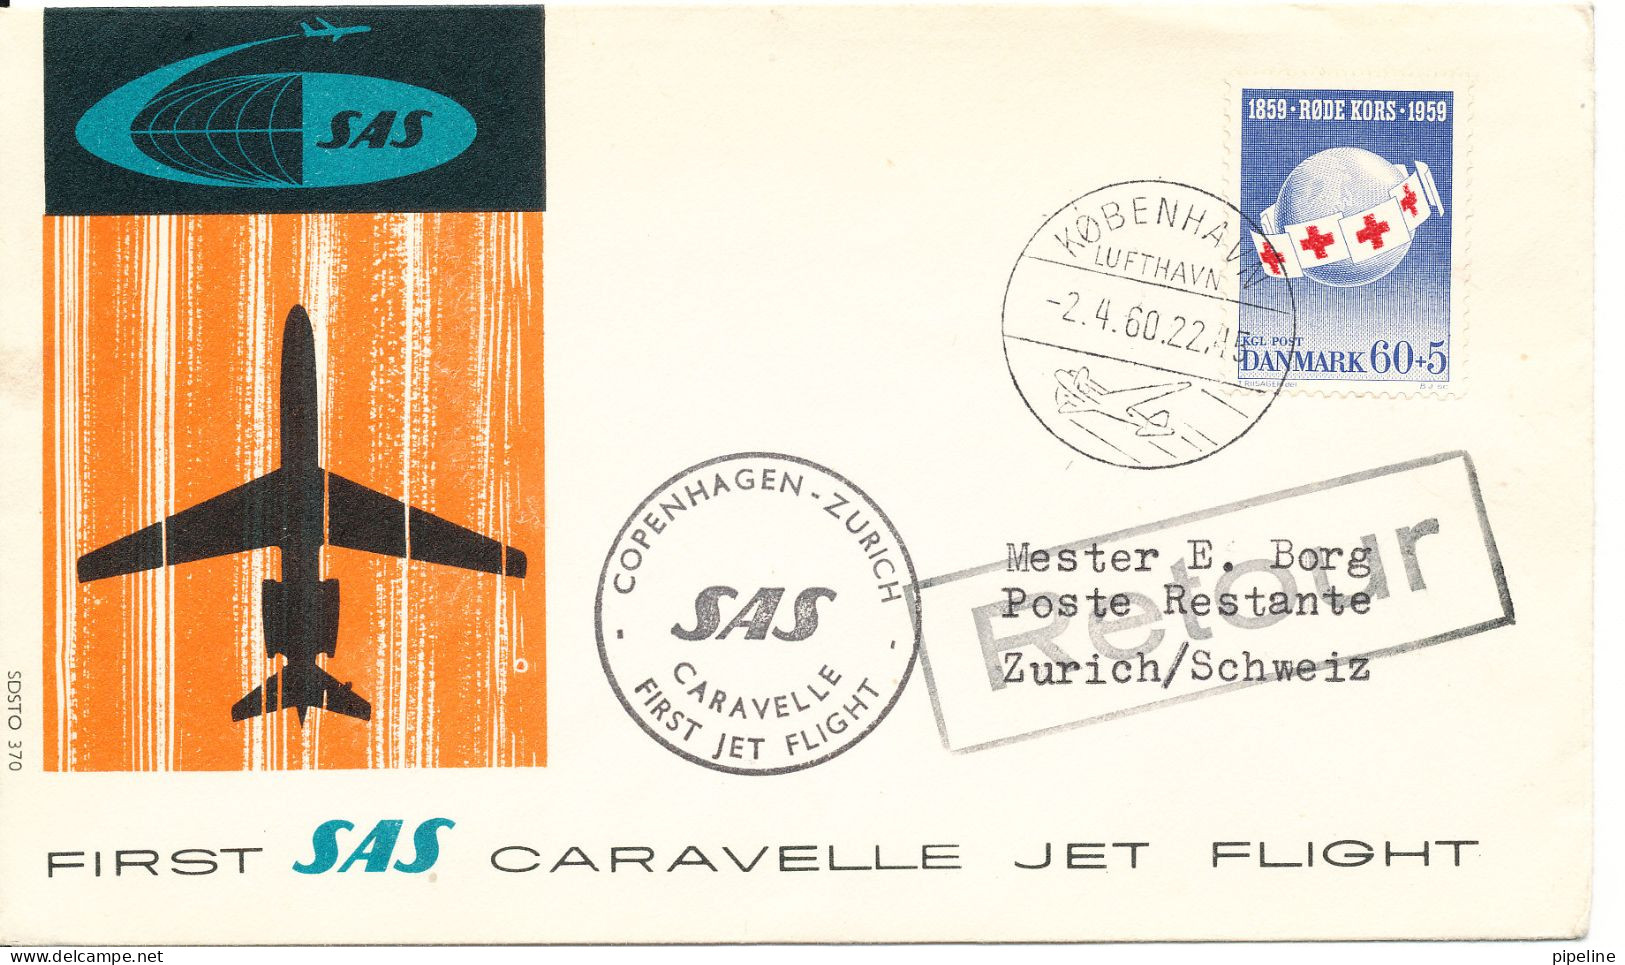 Denmark First SAS Caravelle Jet Flight Copenhagen - Zurich 2-4-1960 - Covers & Documents